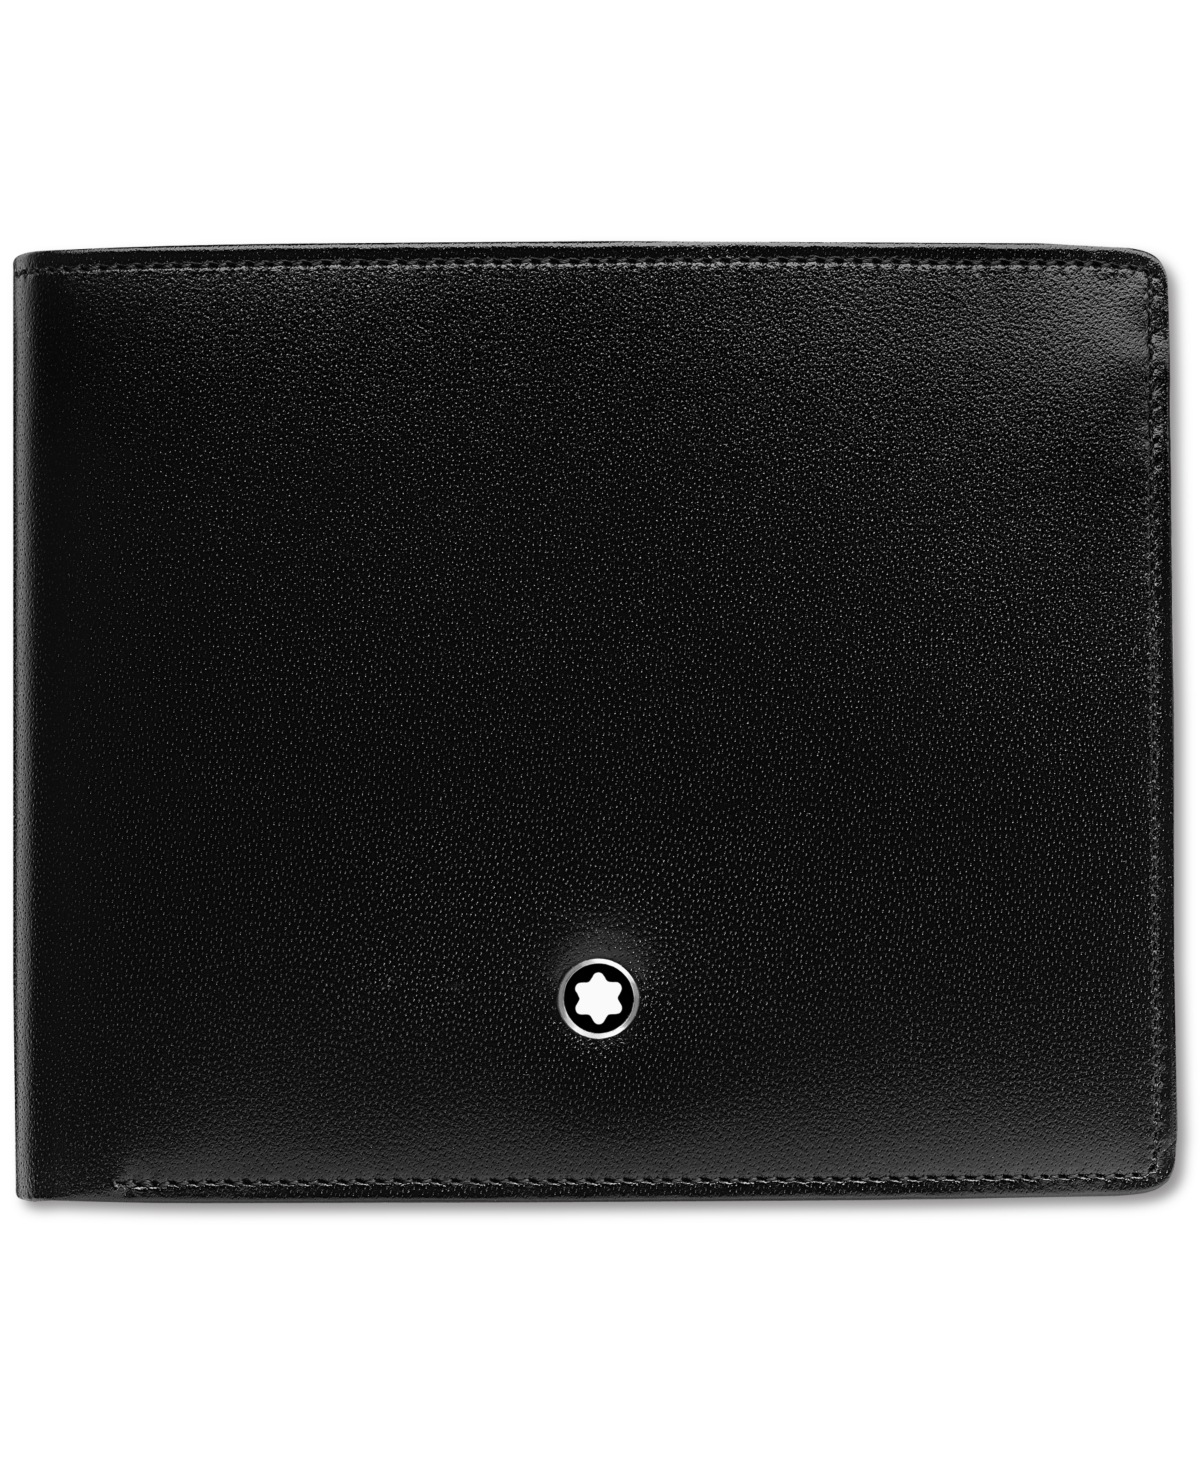 Montblanc Men's Black Leather Meisterstuck Wallet 5525 In No Color